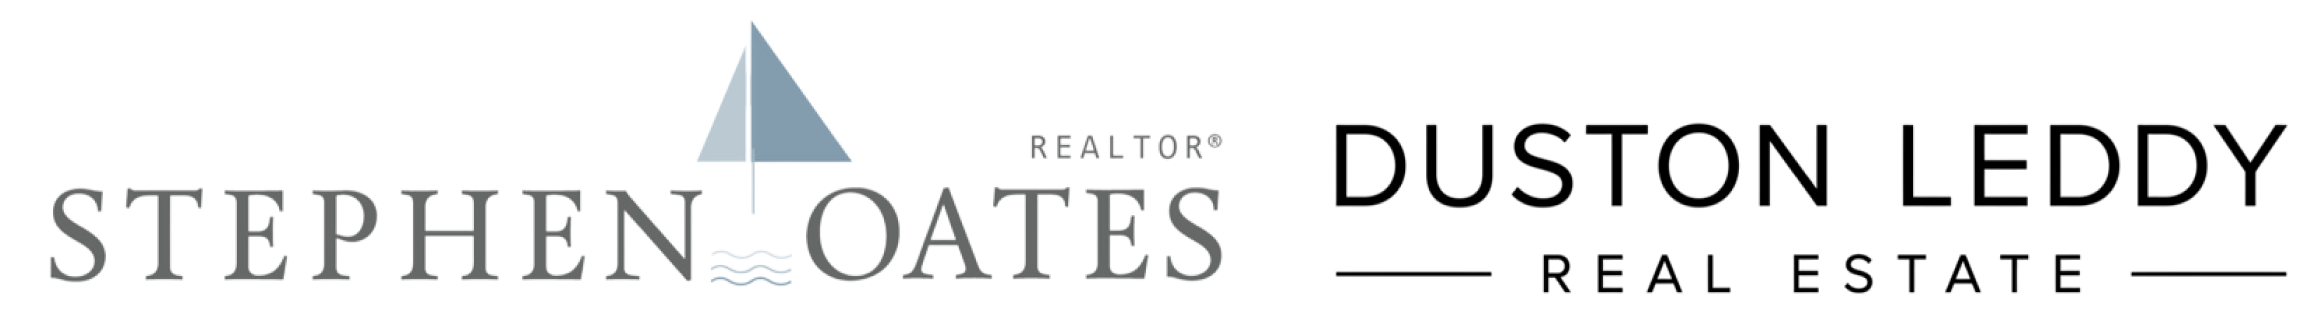 Seacost homes White Header Logo